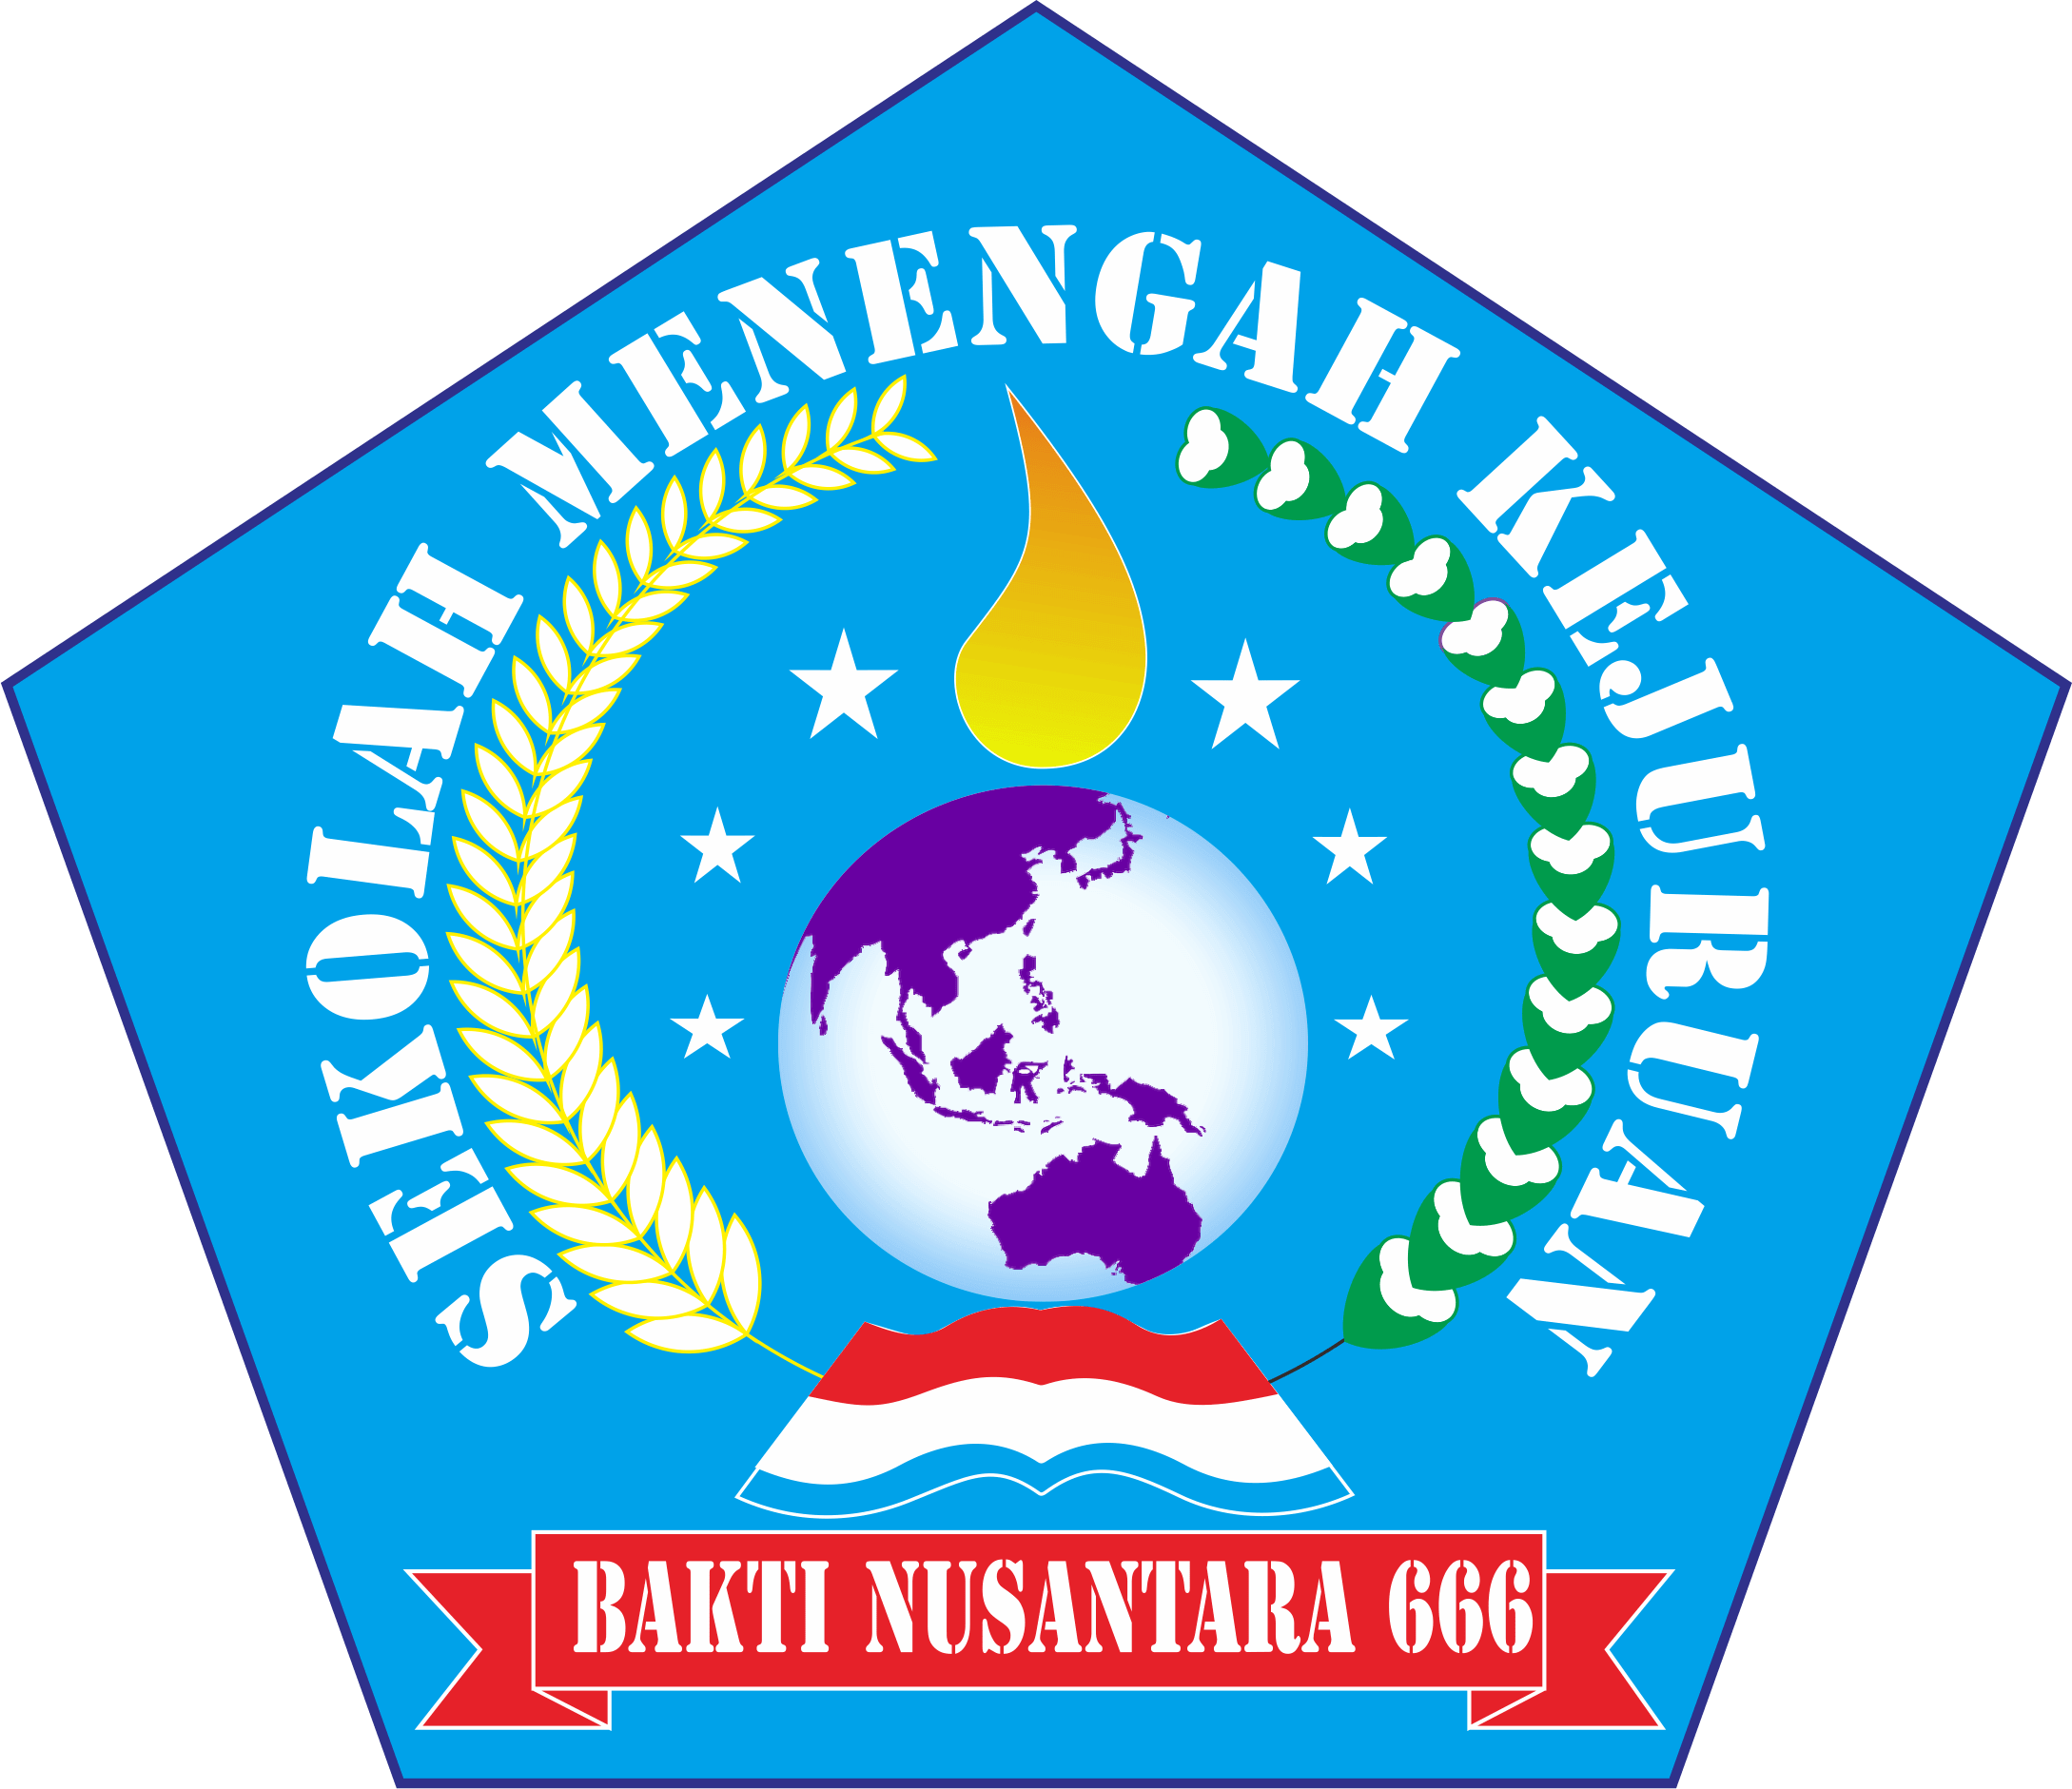 Logo - PPDB SMKBN666